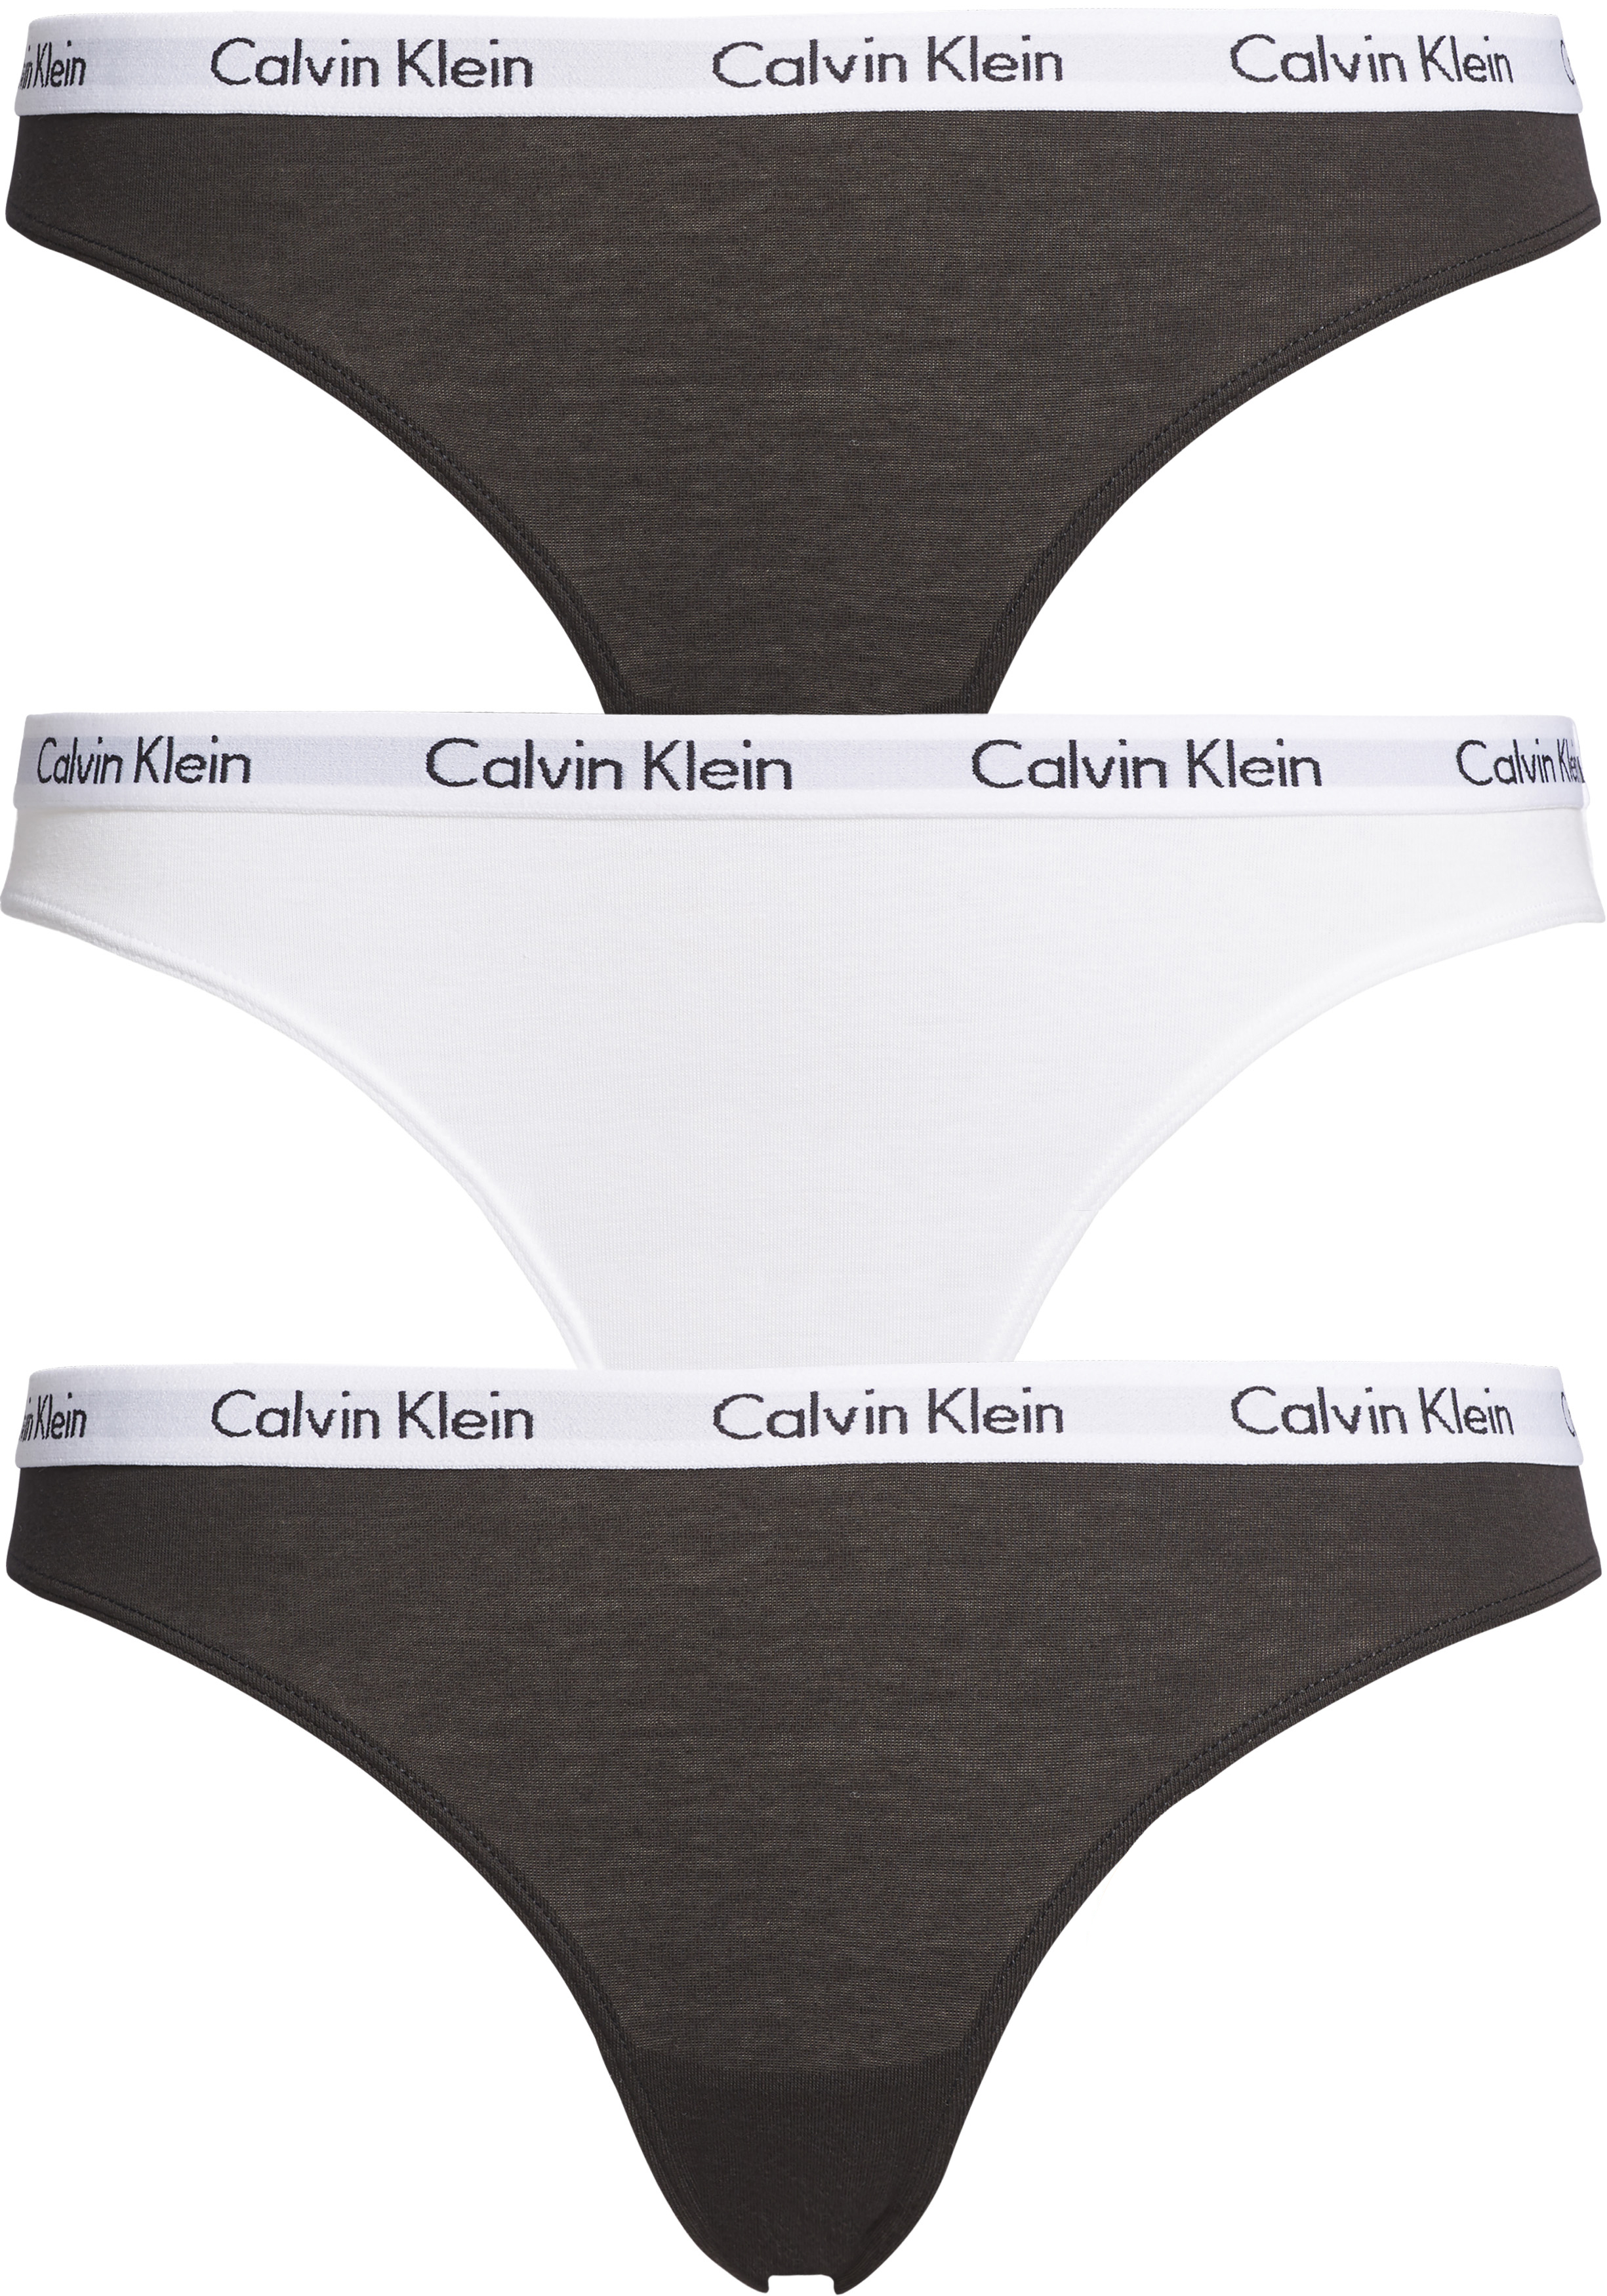 Calvin Klein dames slips (3-pack), zwart, wit en zwart